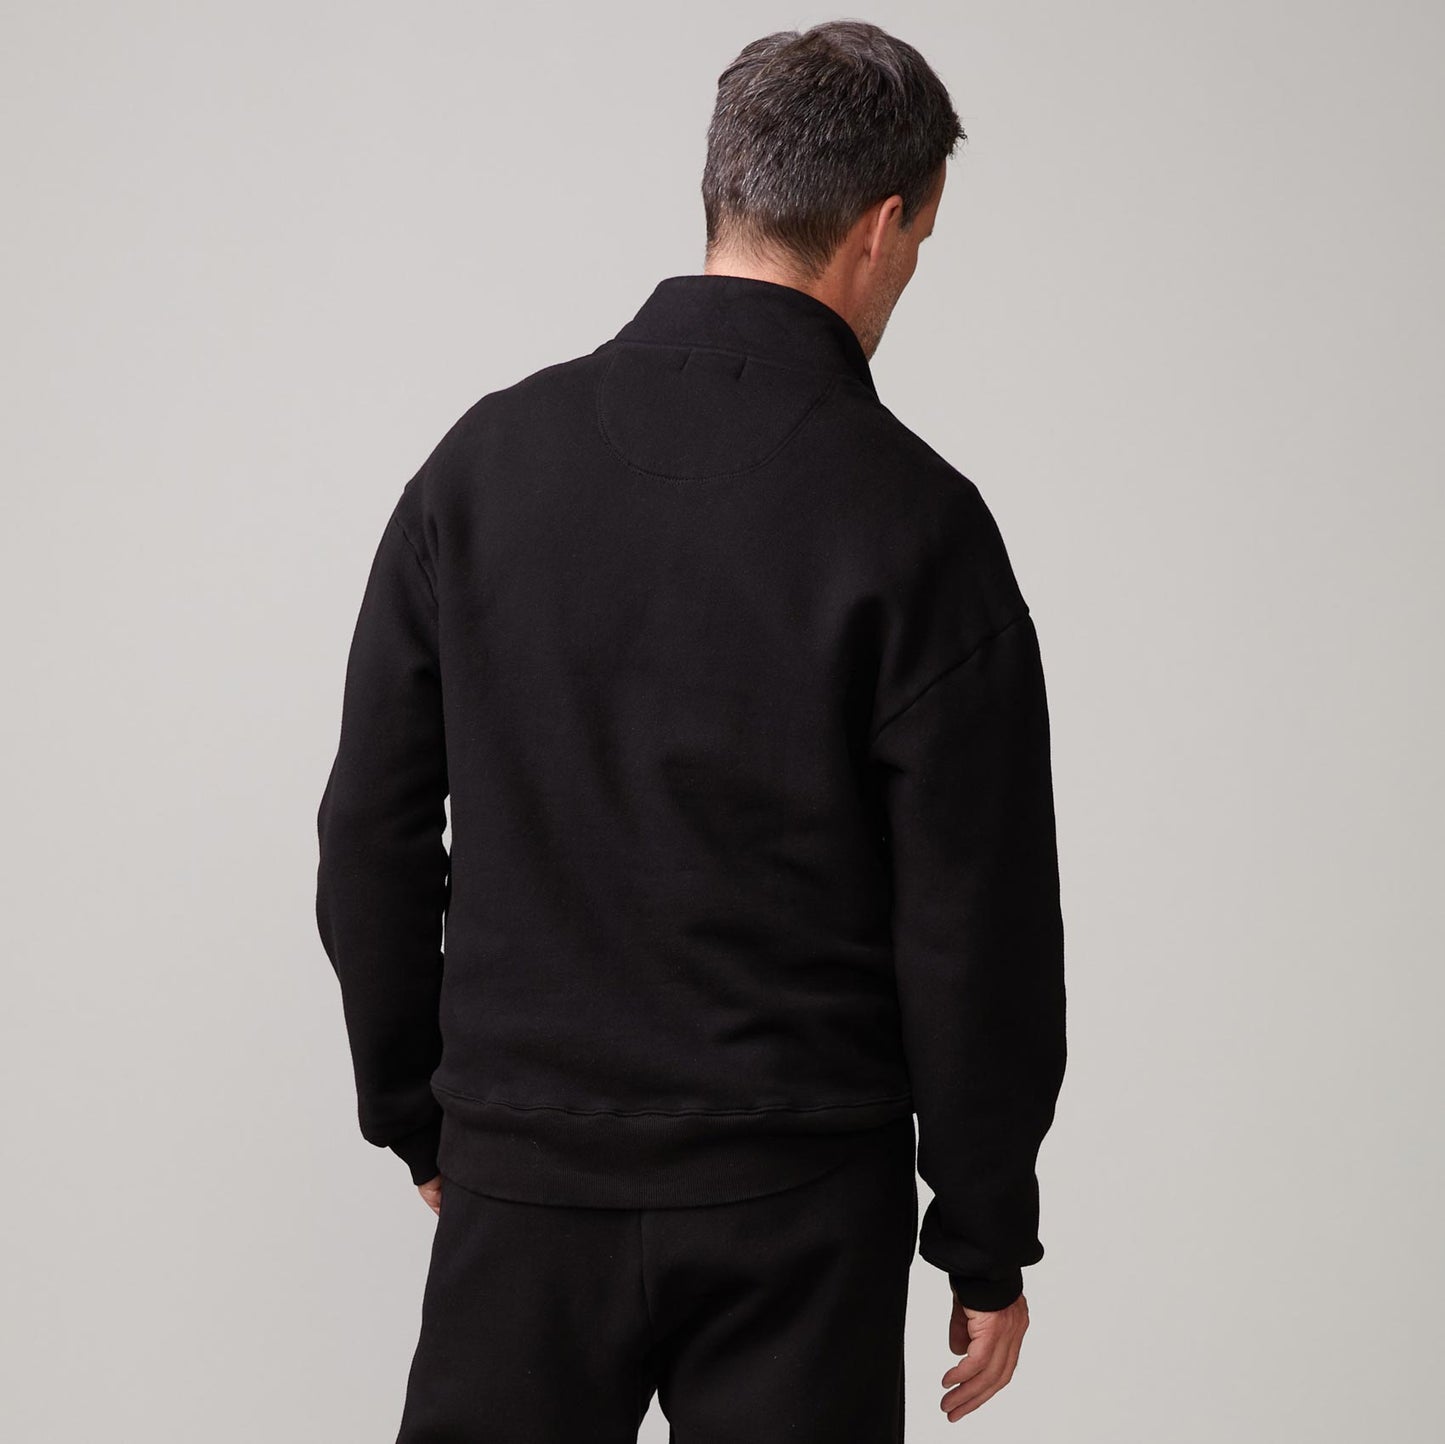 Back view of model wearing the half zip sweatshirt in black.